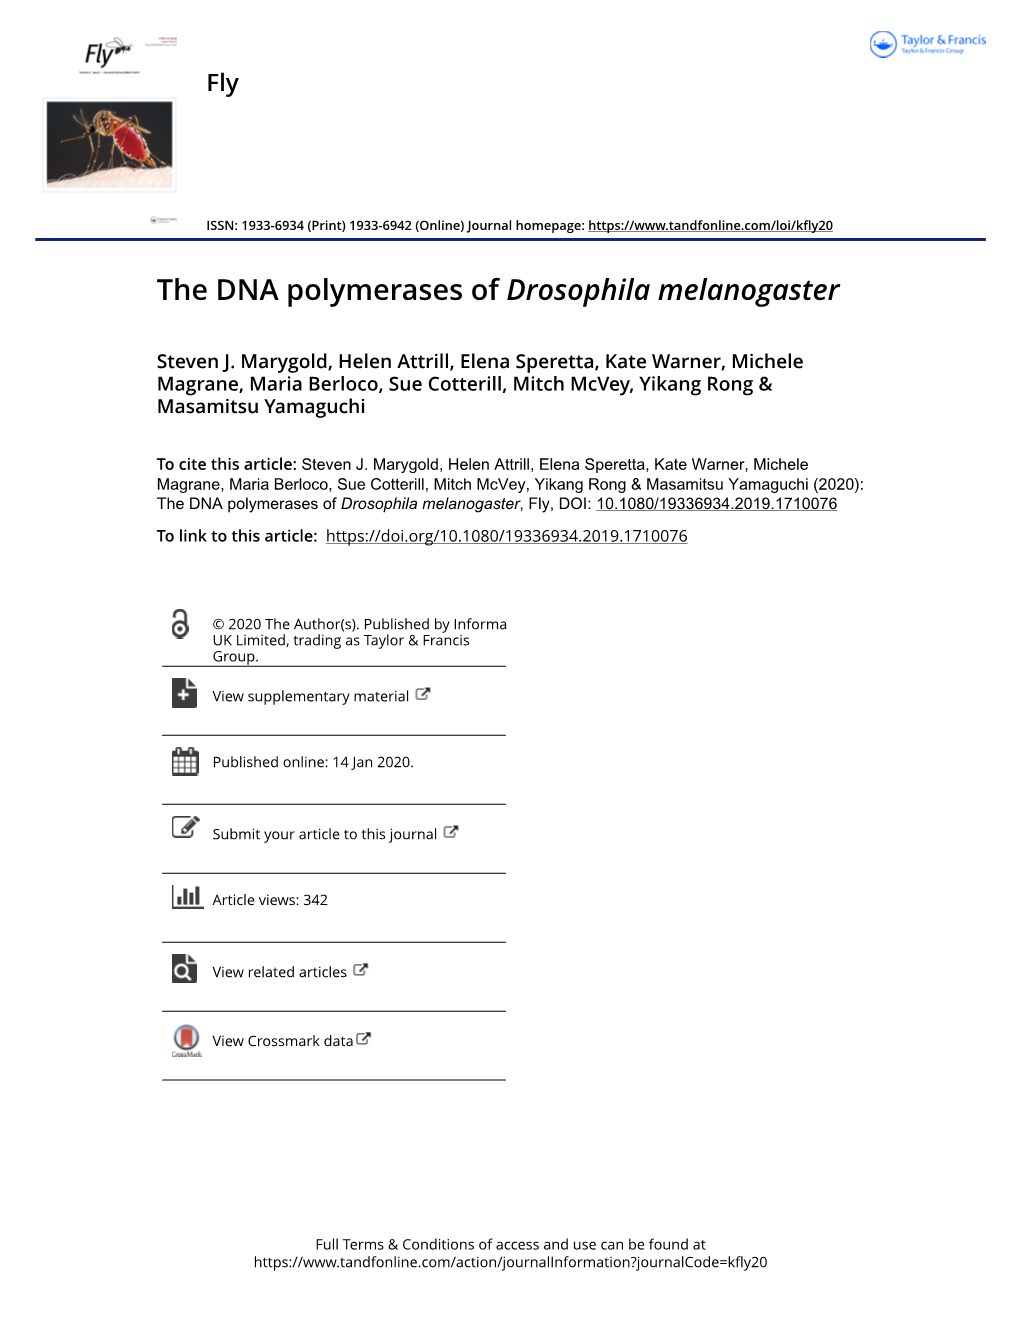 The DNA Polymerases of Drosophila Melanogaster